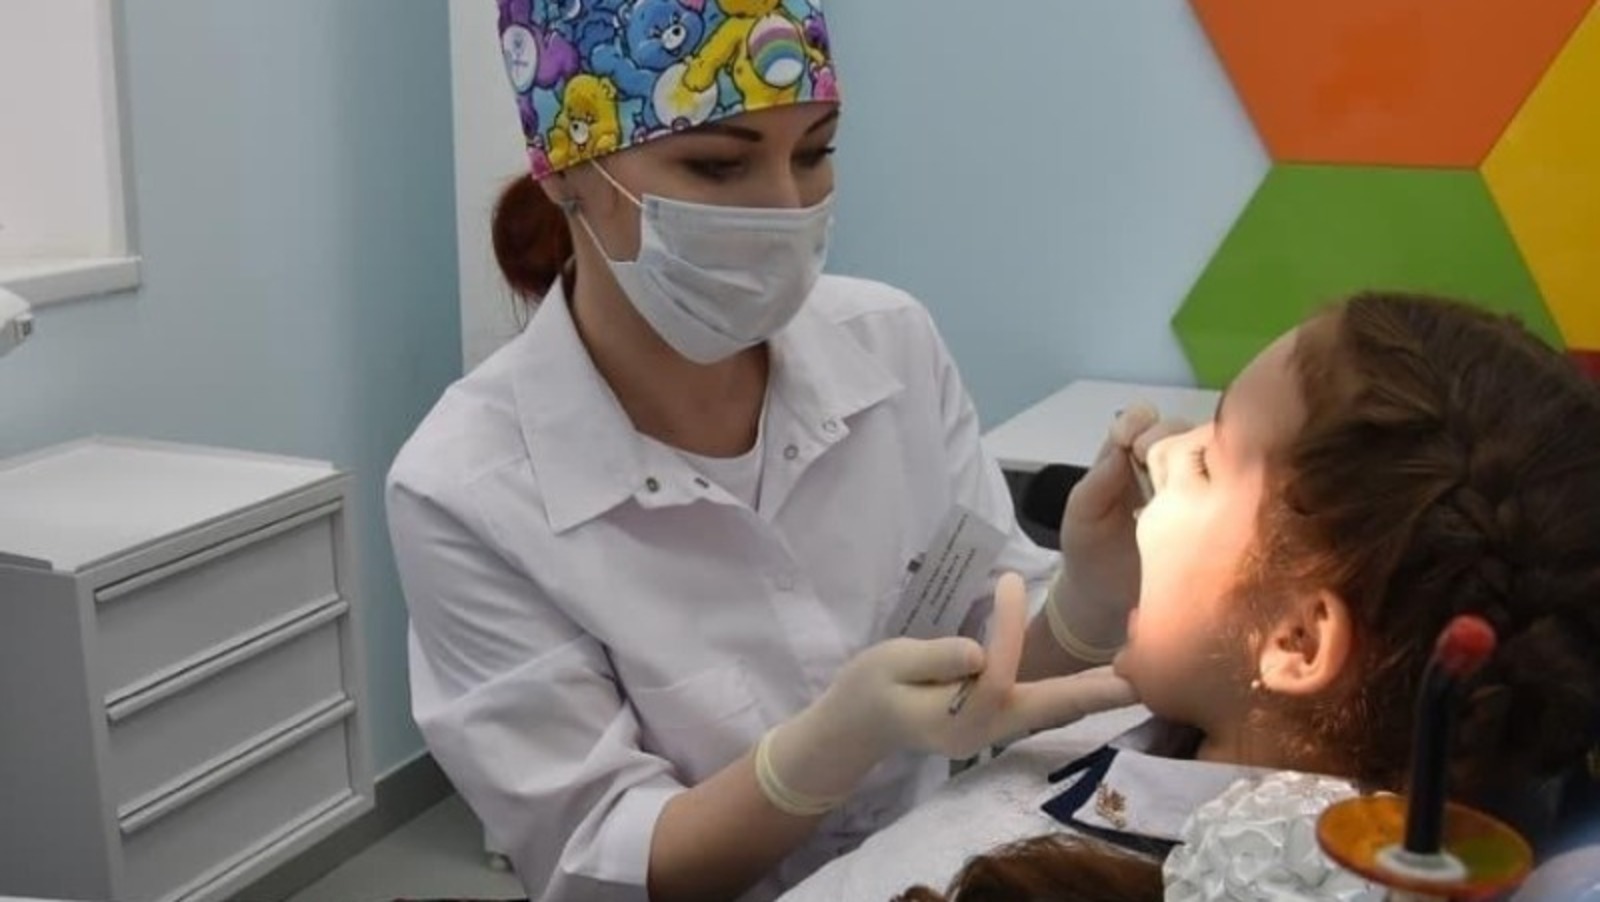 Республикала уҡытыусылар мәктәптең стоматология кабинеттарына мөрәжәғәт итергә мөмкин